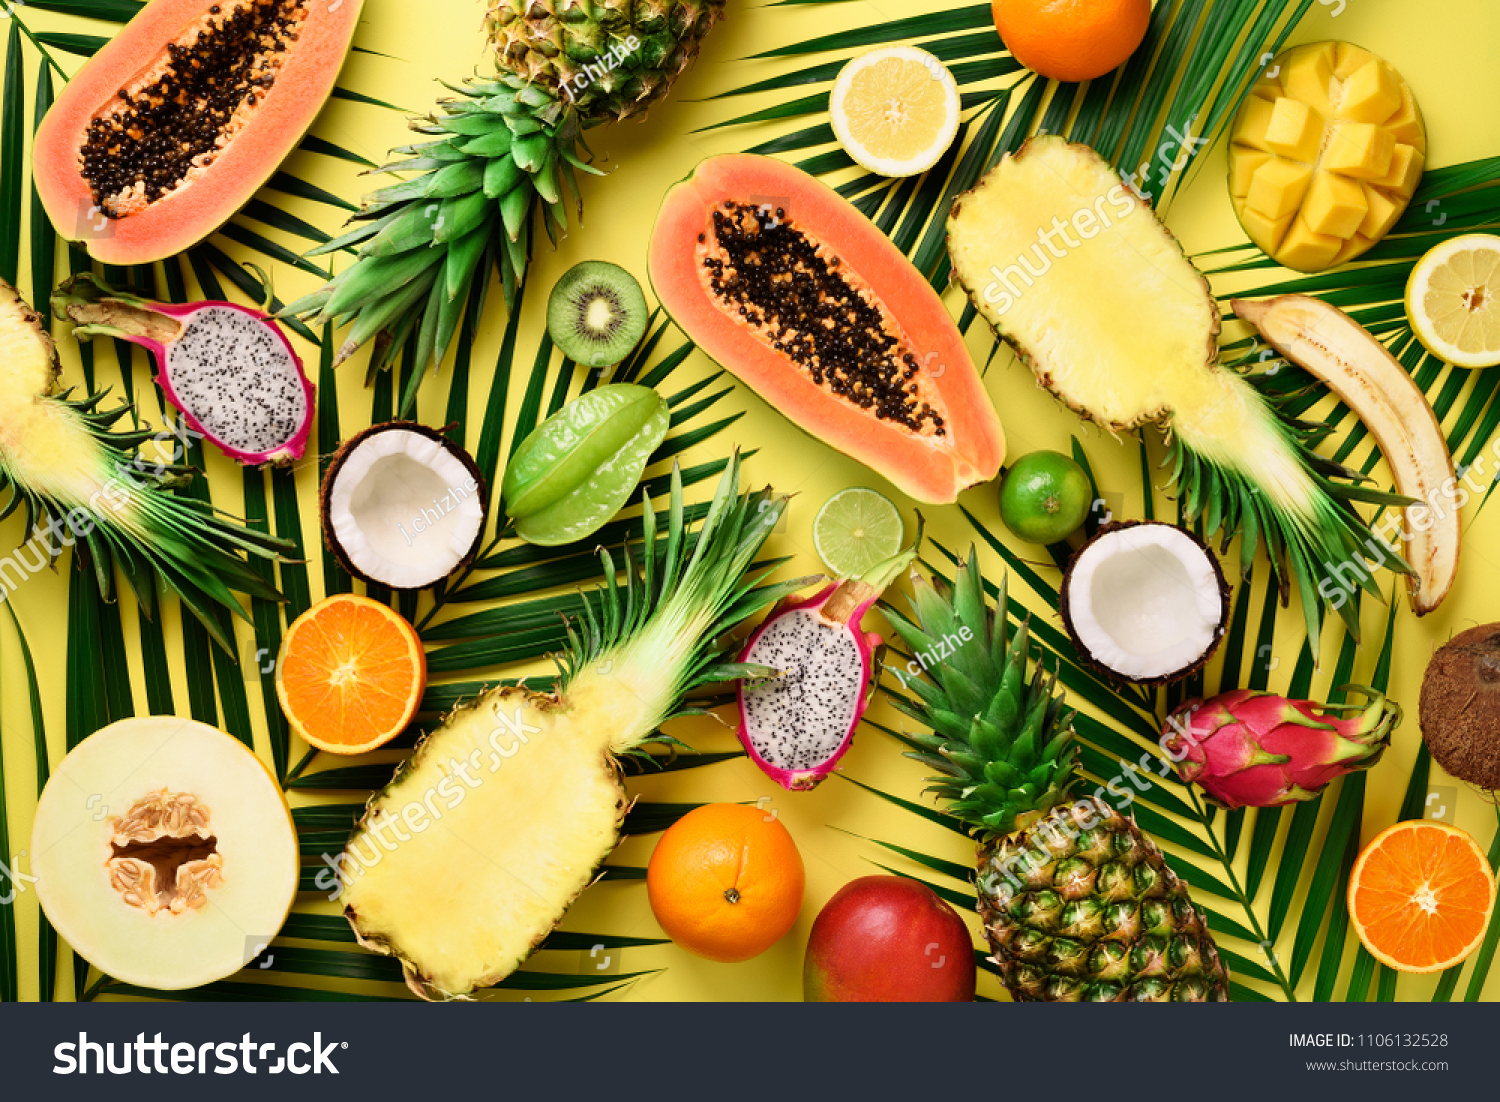 Exotic fruits and tropical palm leaves on pastel yellow background - papaya, mango, pineapple, banana, carambola, dragon fruit, kiwi, lemon, orange, melon, coconut, lime. Top view